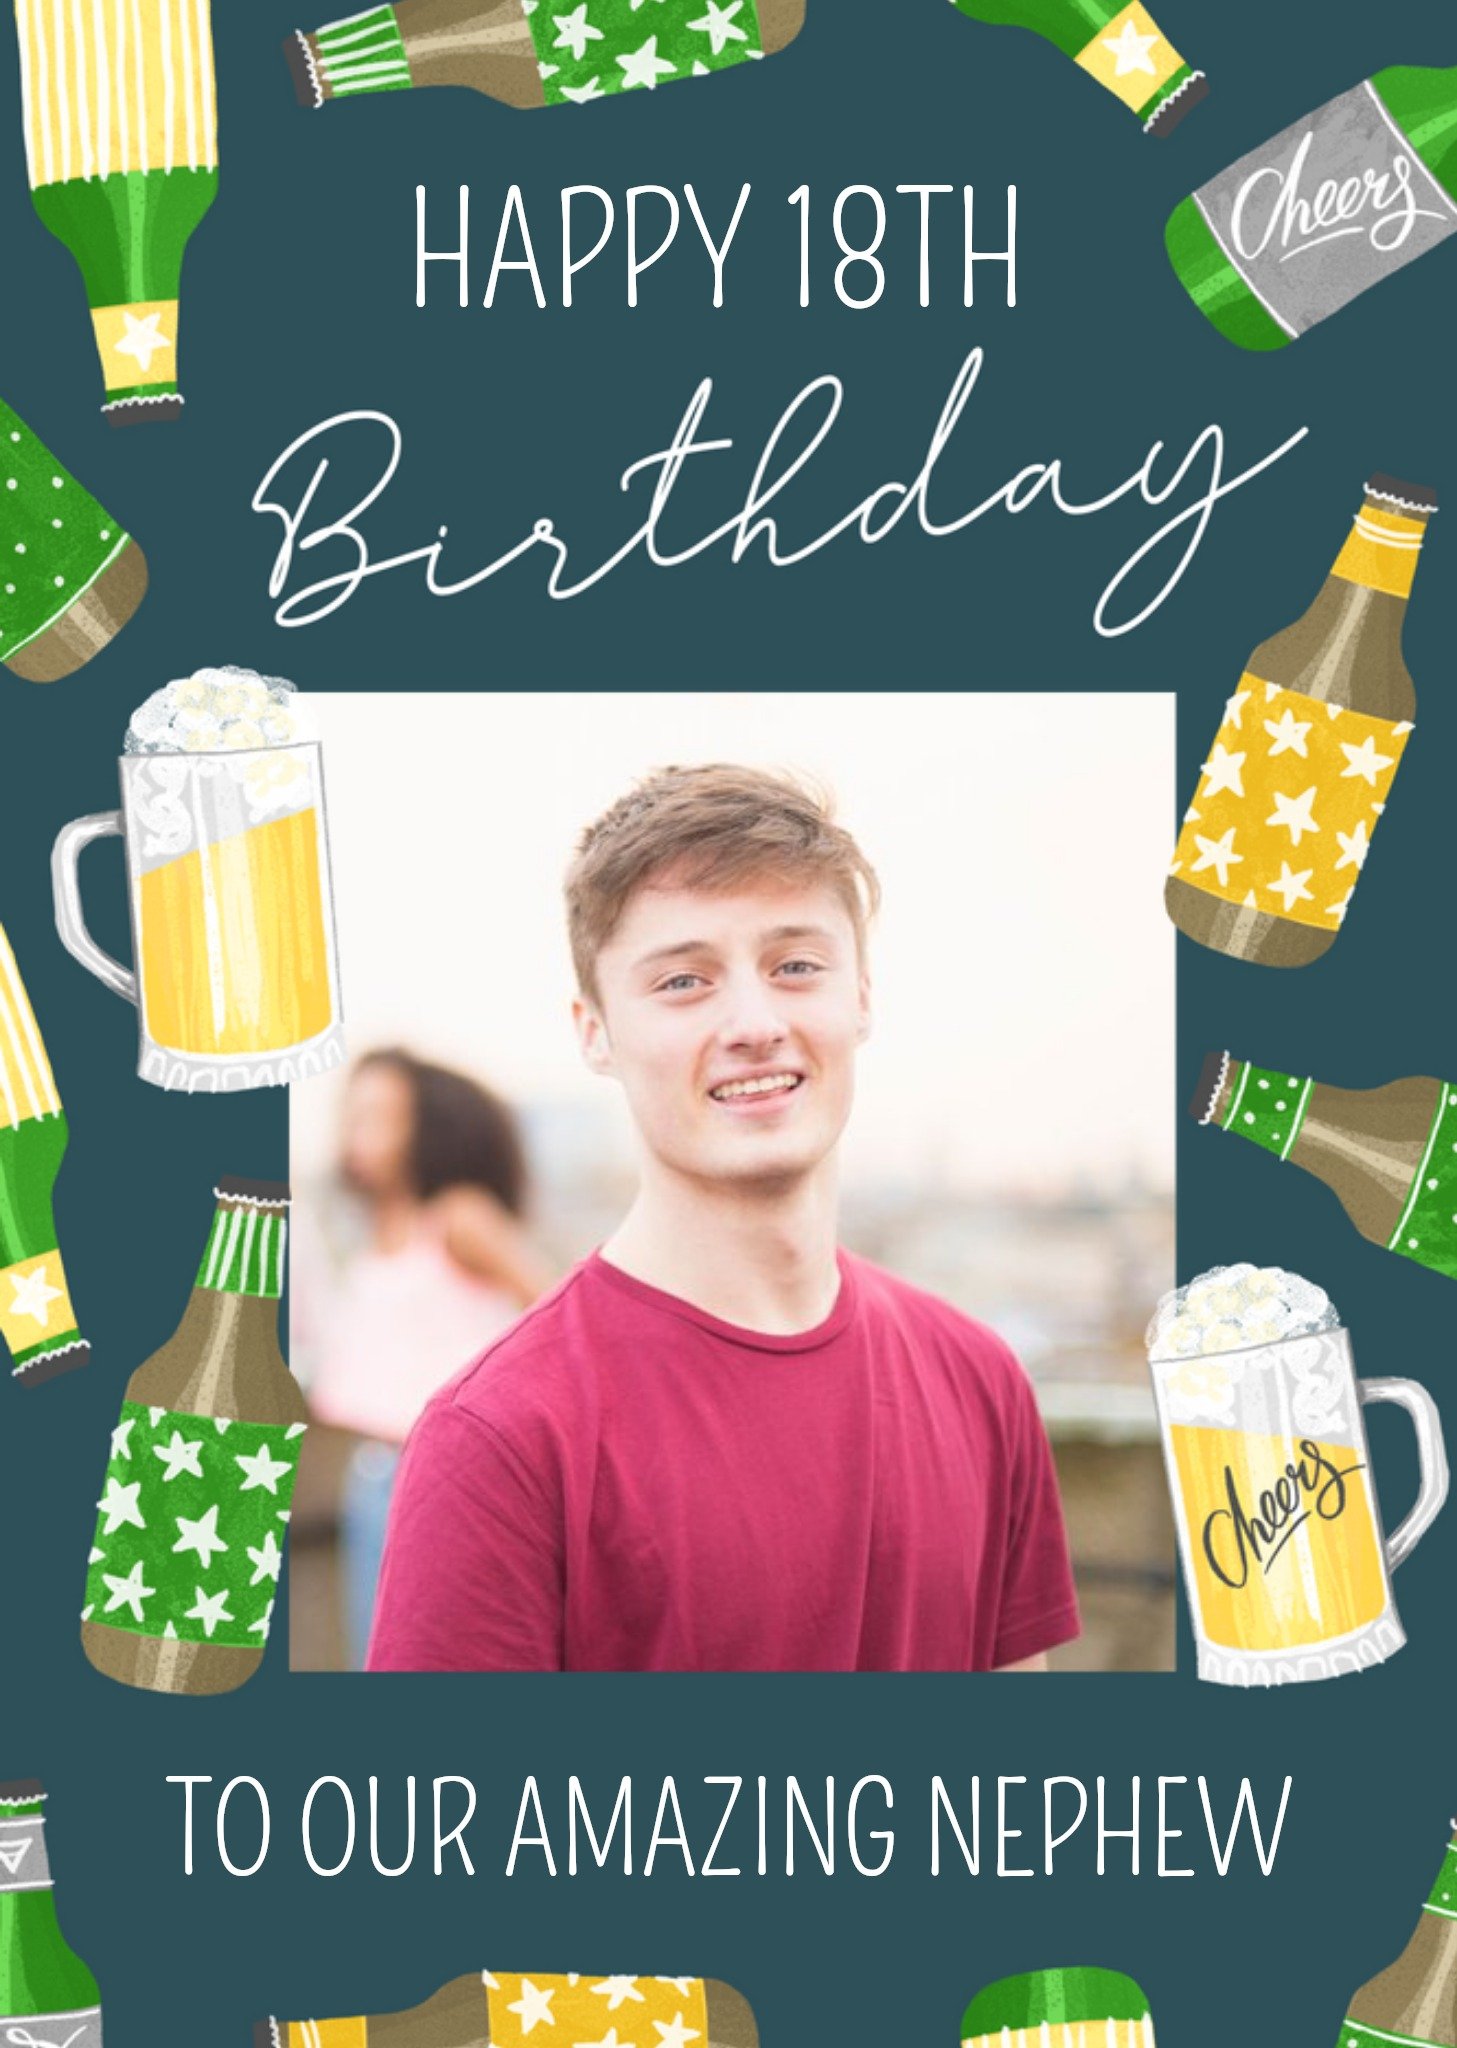 Making Meadows Beer Illustrations Photo Upload Amazing Nephew Birthday Card Ecard